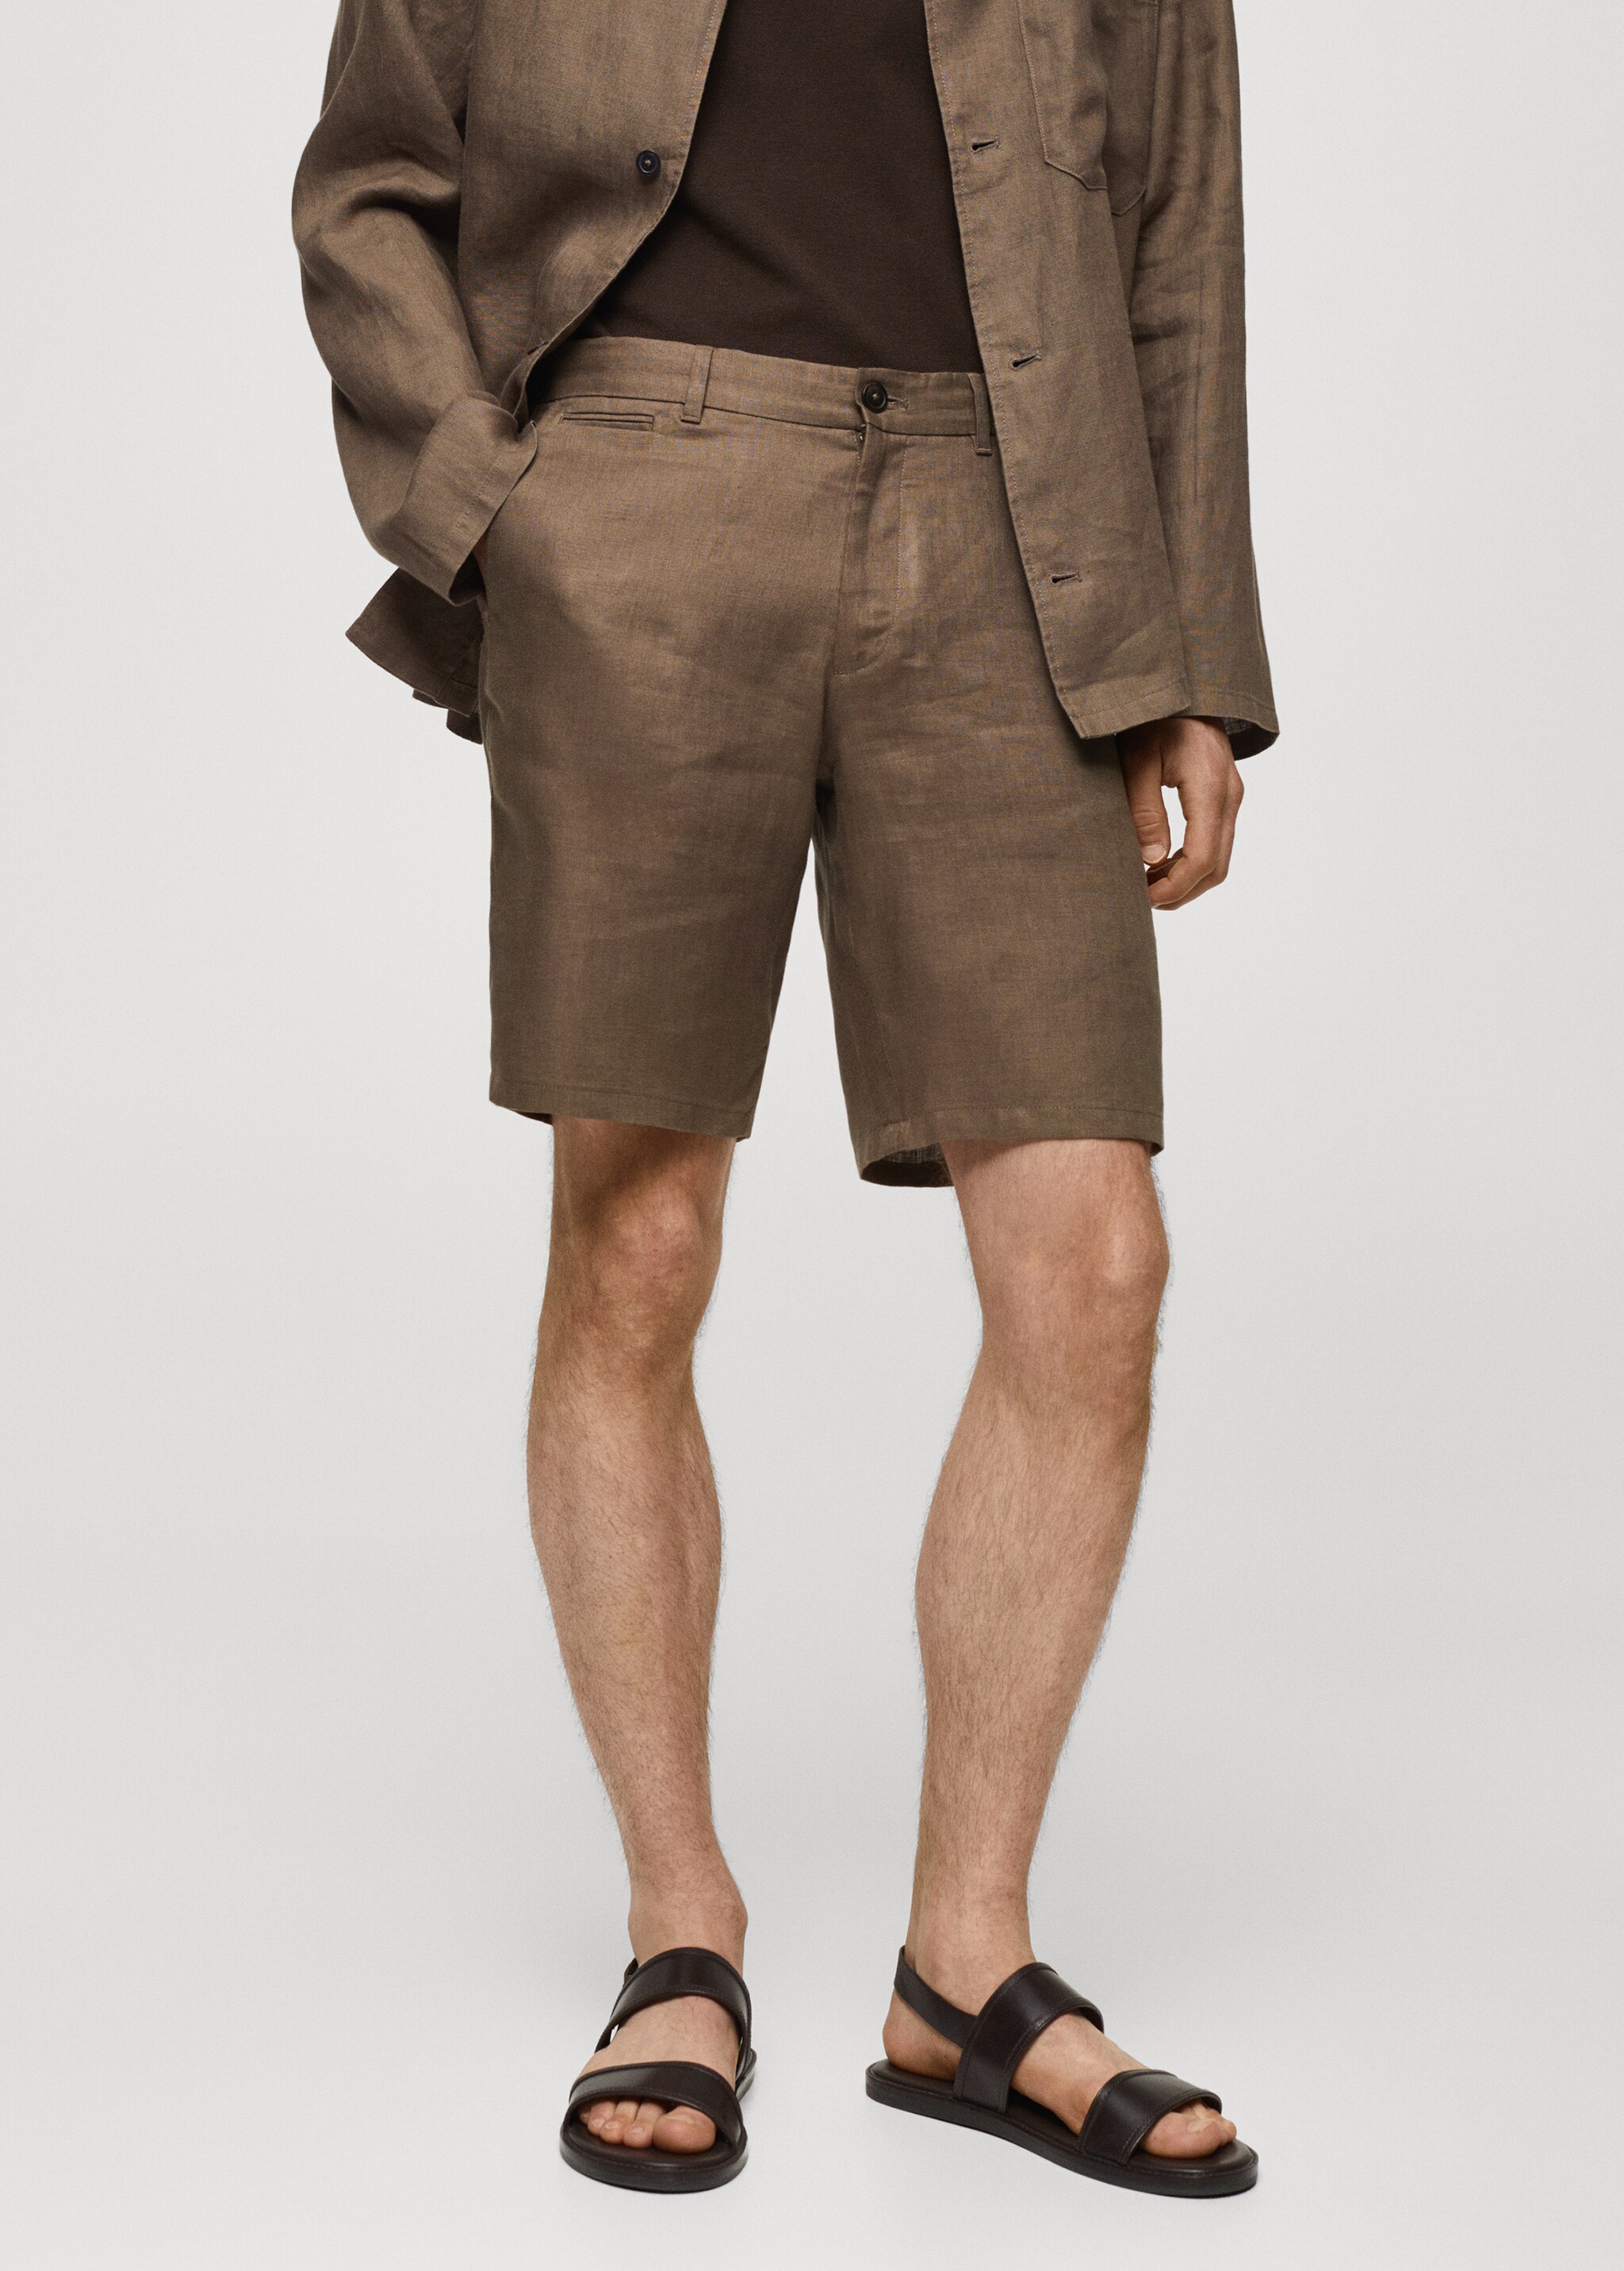 Slim fit 100% linen Bermuda shorts - Medium plane